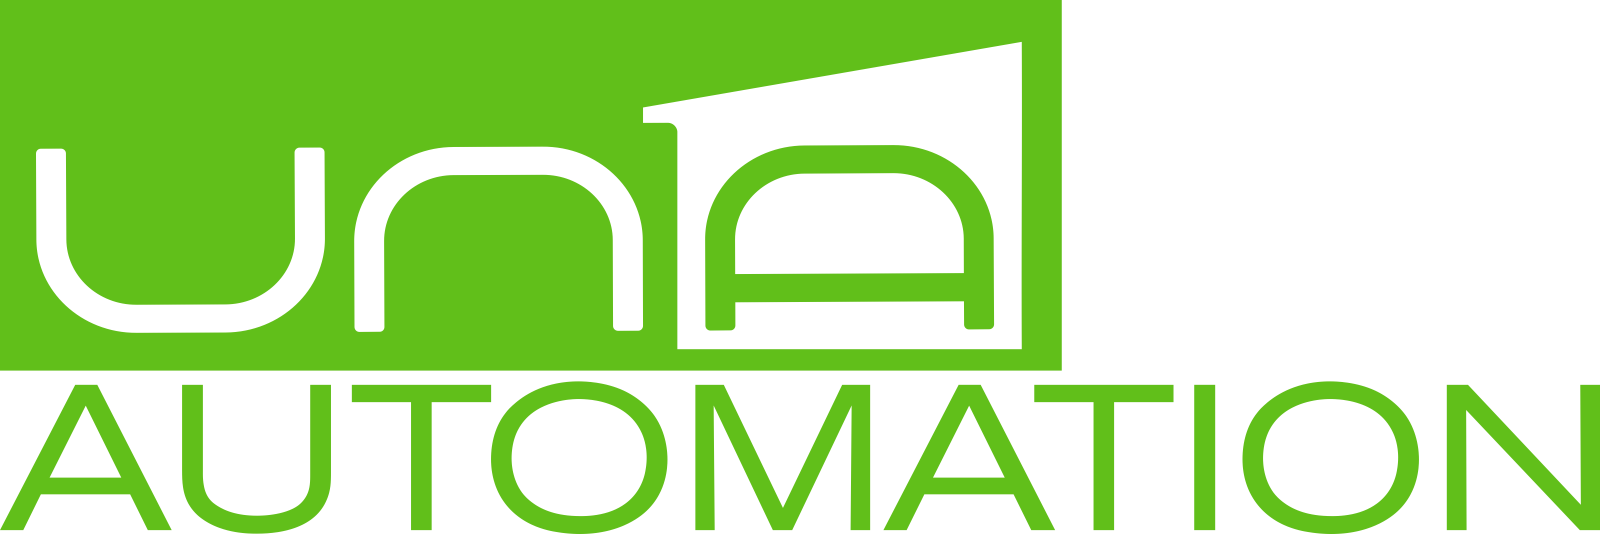 Google Home or Alexa? - Domologica UNA Automation